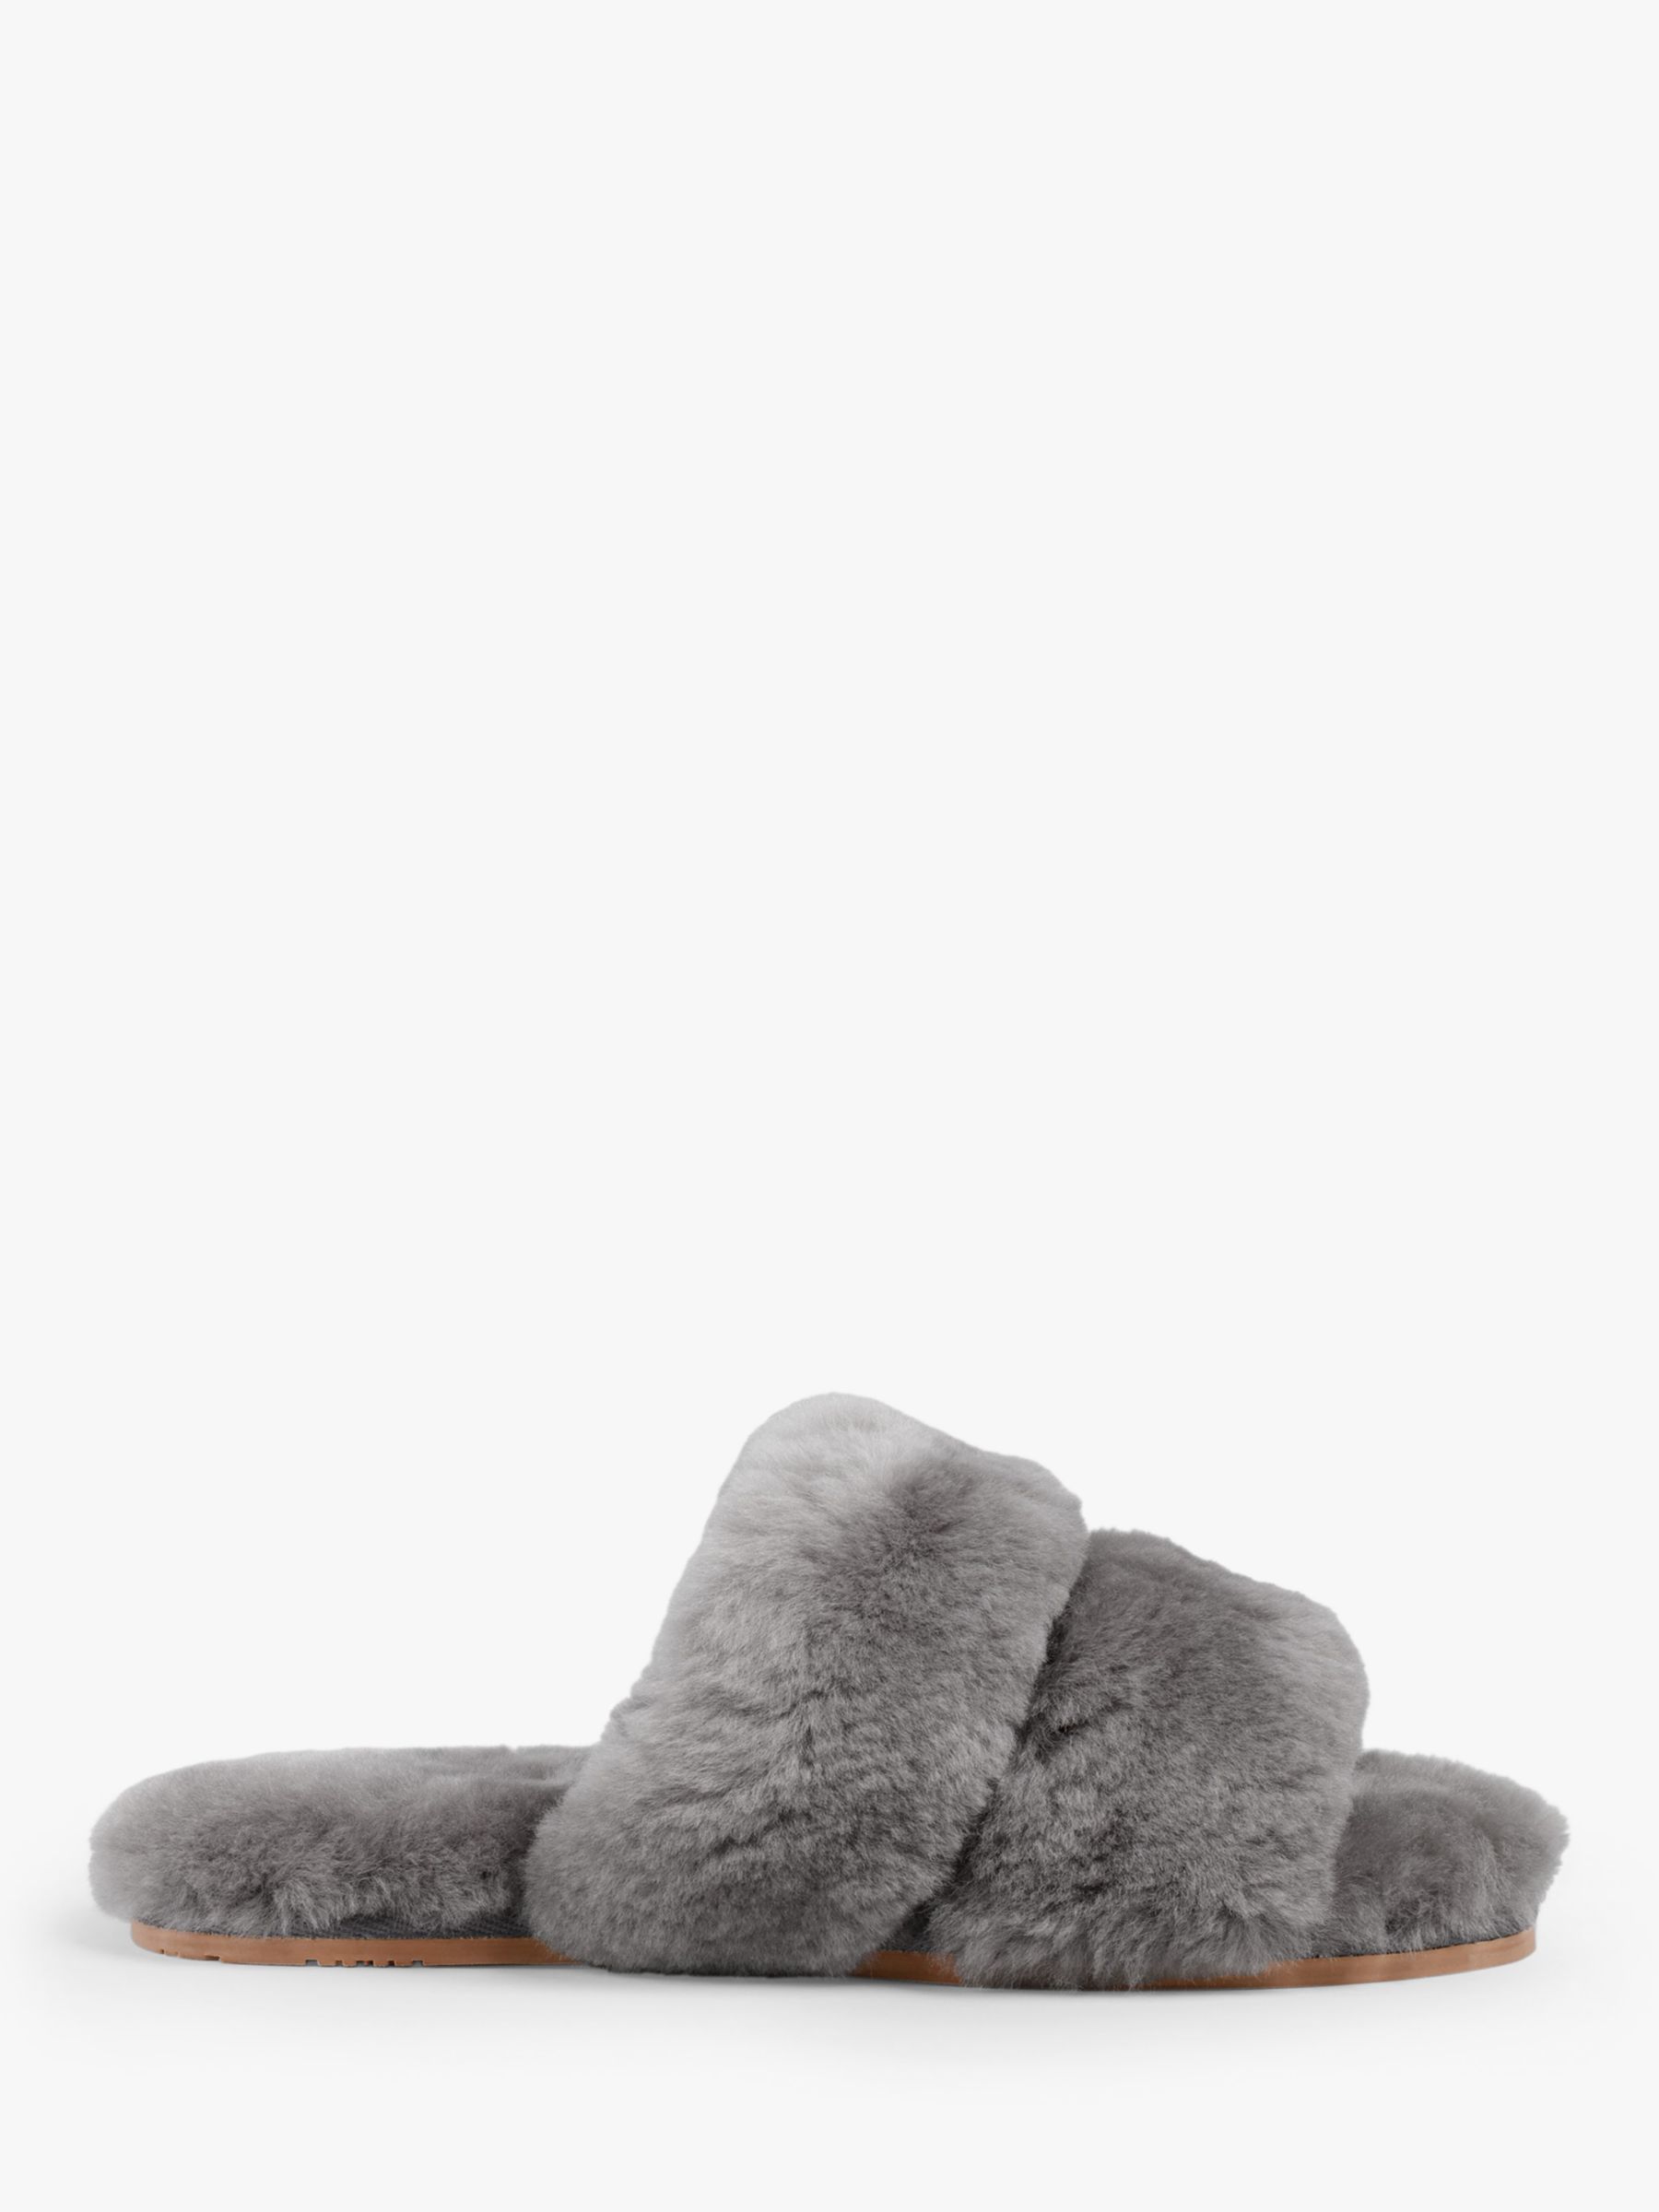 HUSH Arundel Slippers, Grey, 5